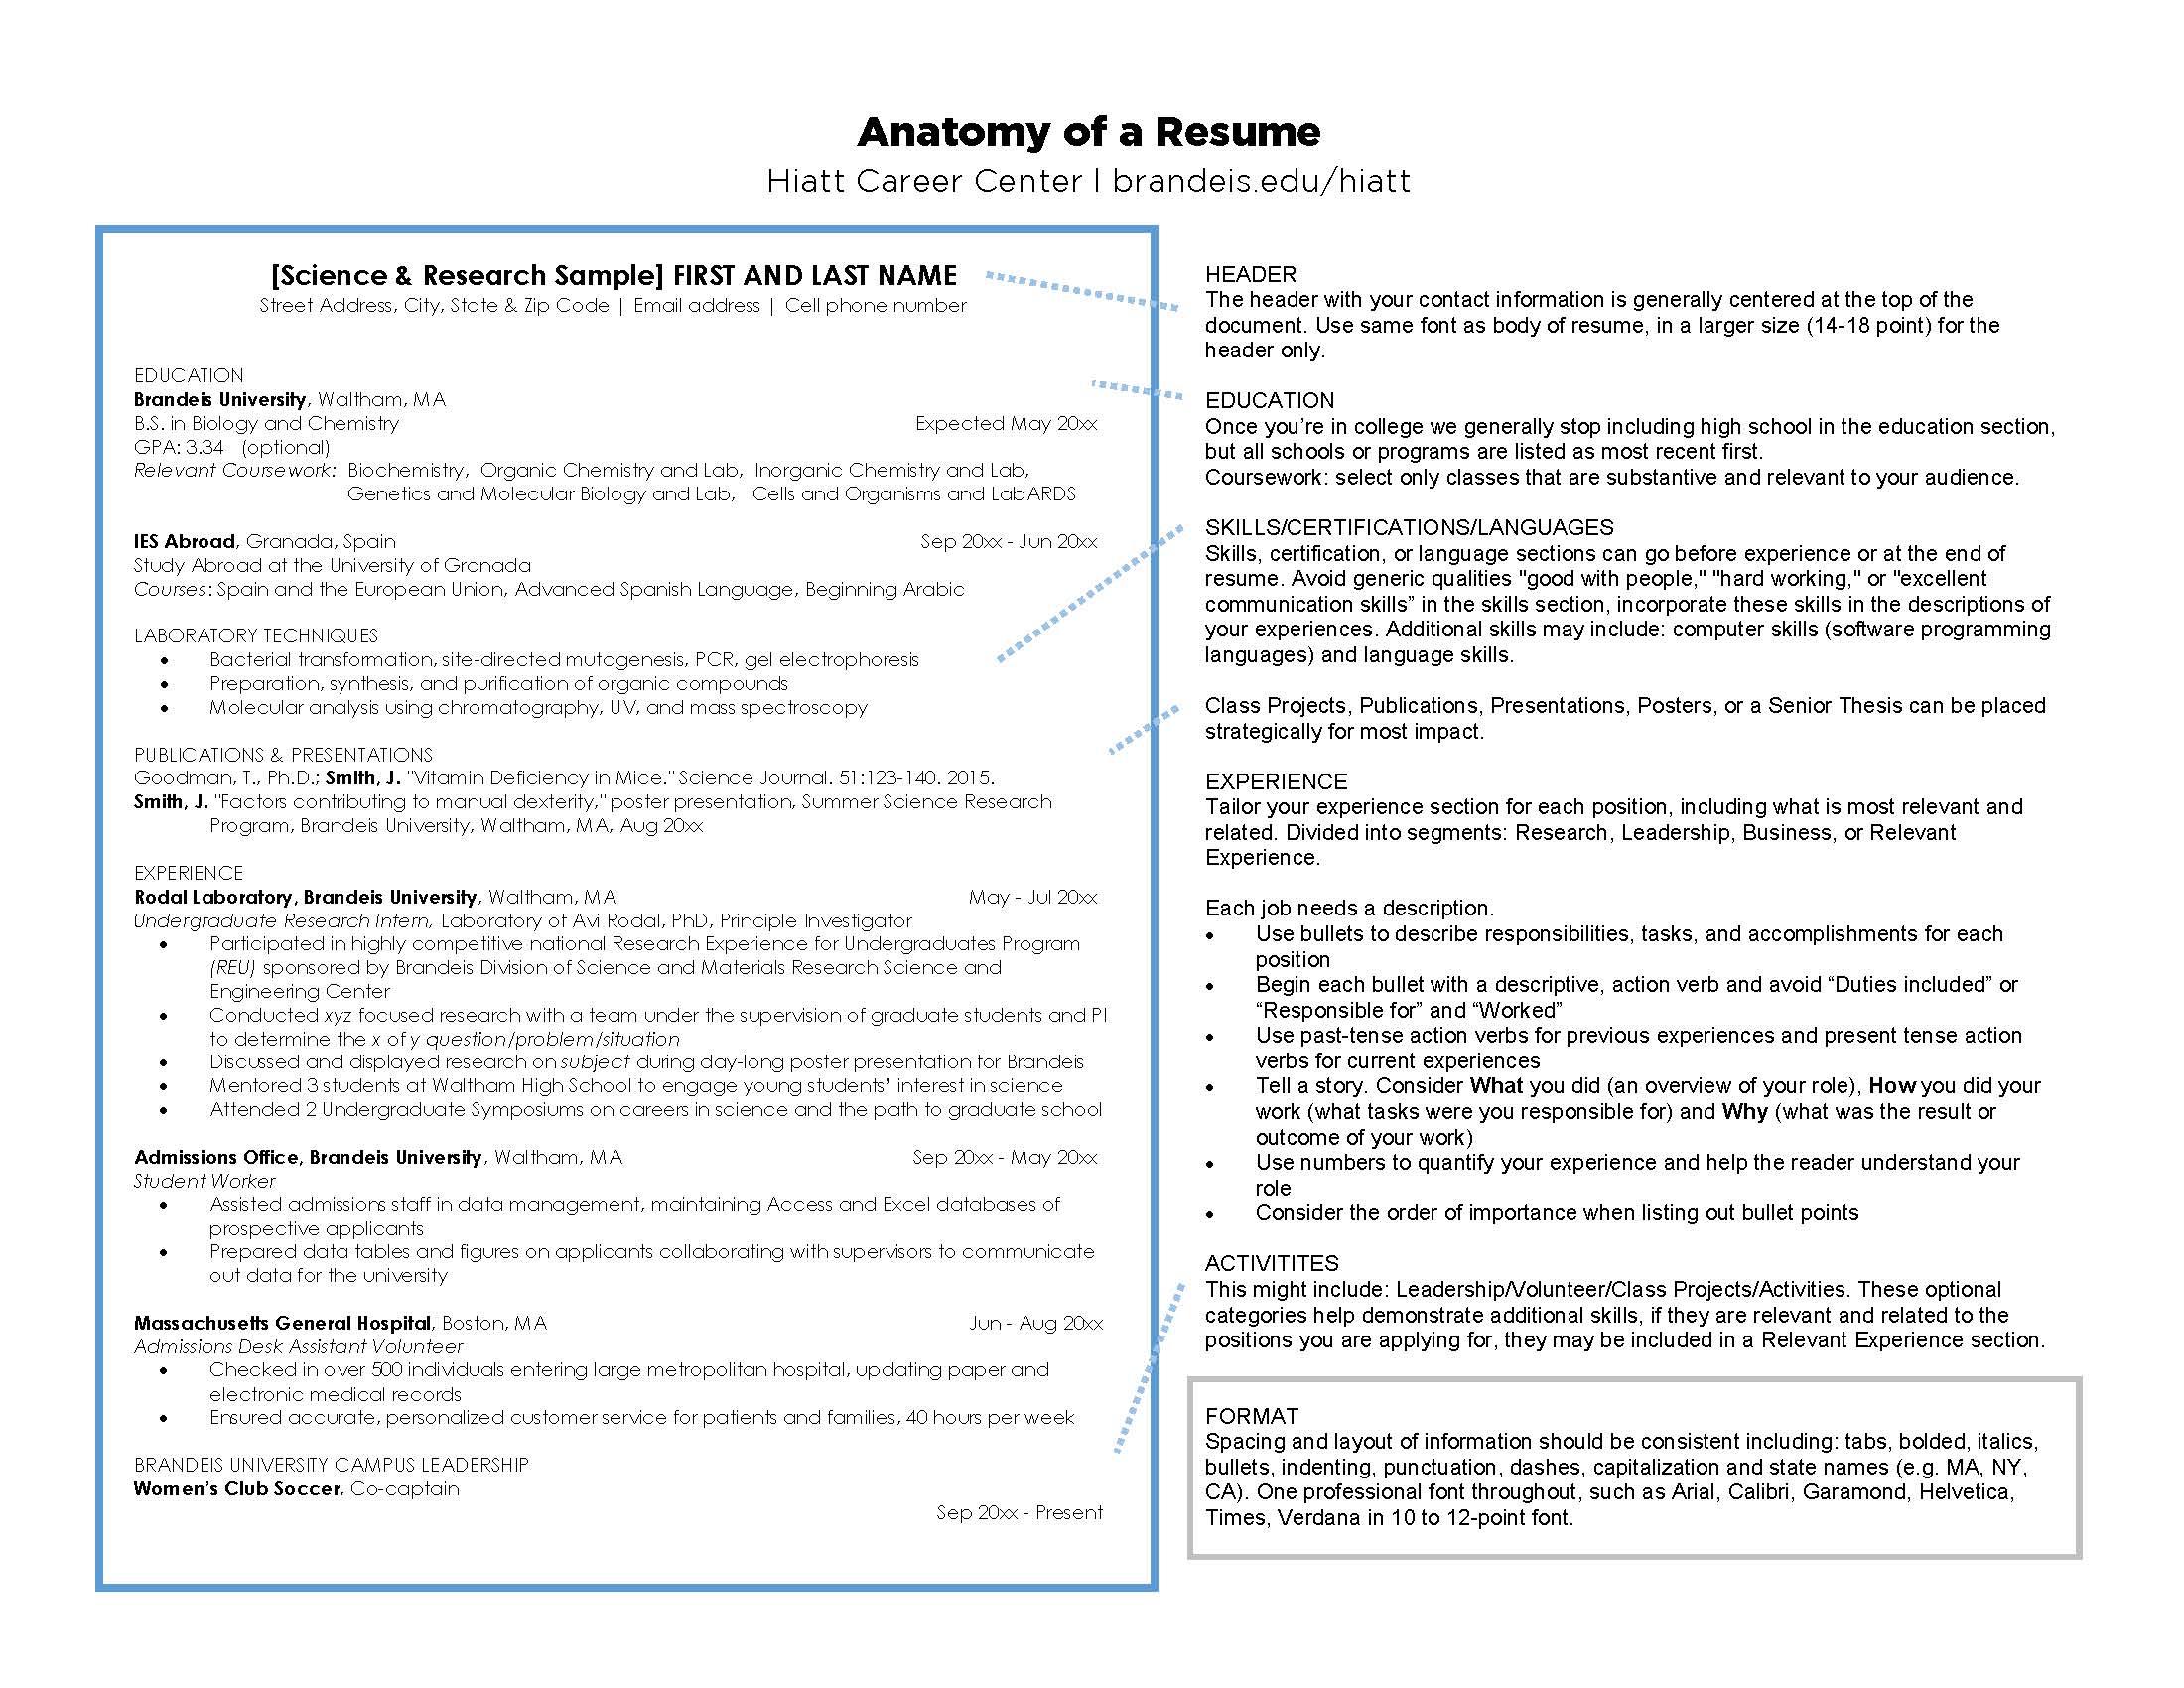 Anatomy of a Resume